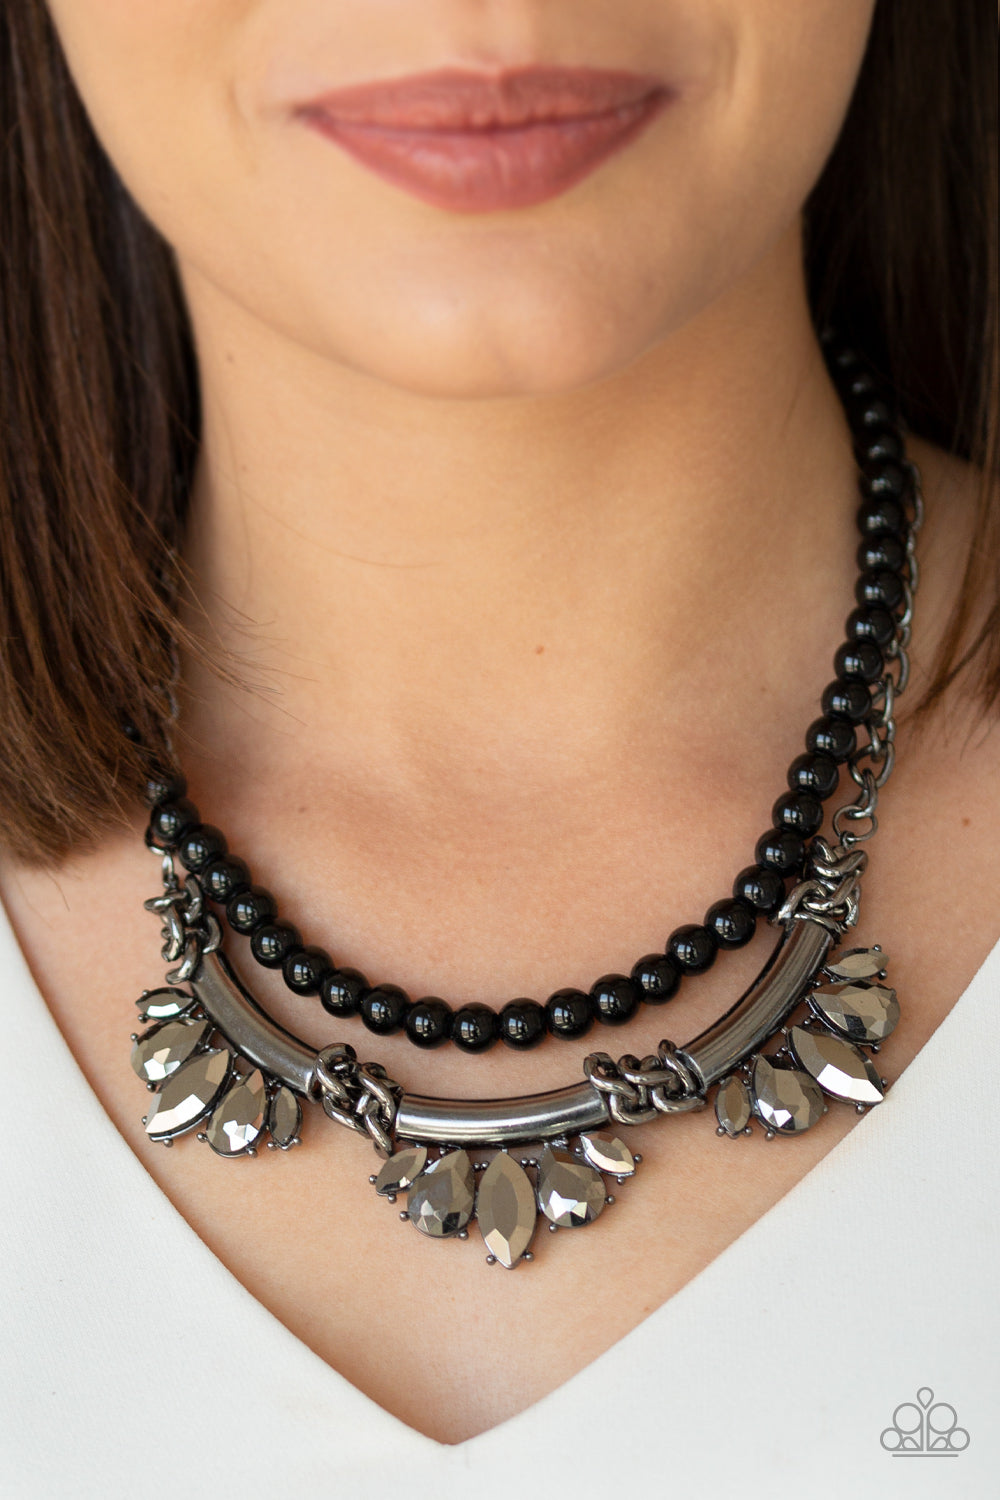 Bow Before The Queen - Black Beads Hematite Rhinestone Paparazzi Jewelry Necklace paparazzi accessories jewelry neckace